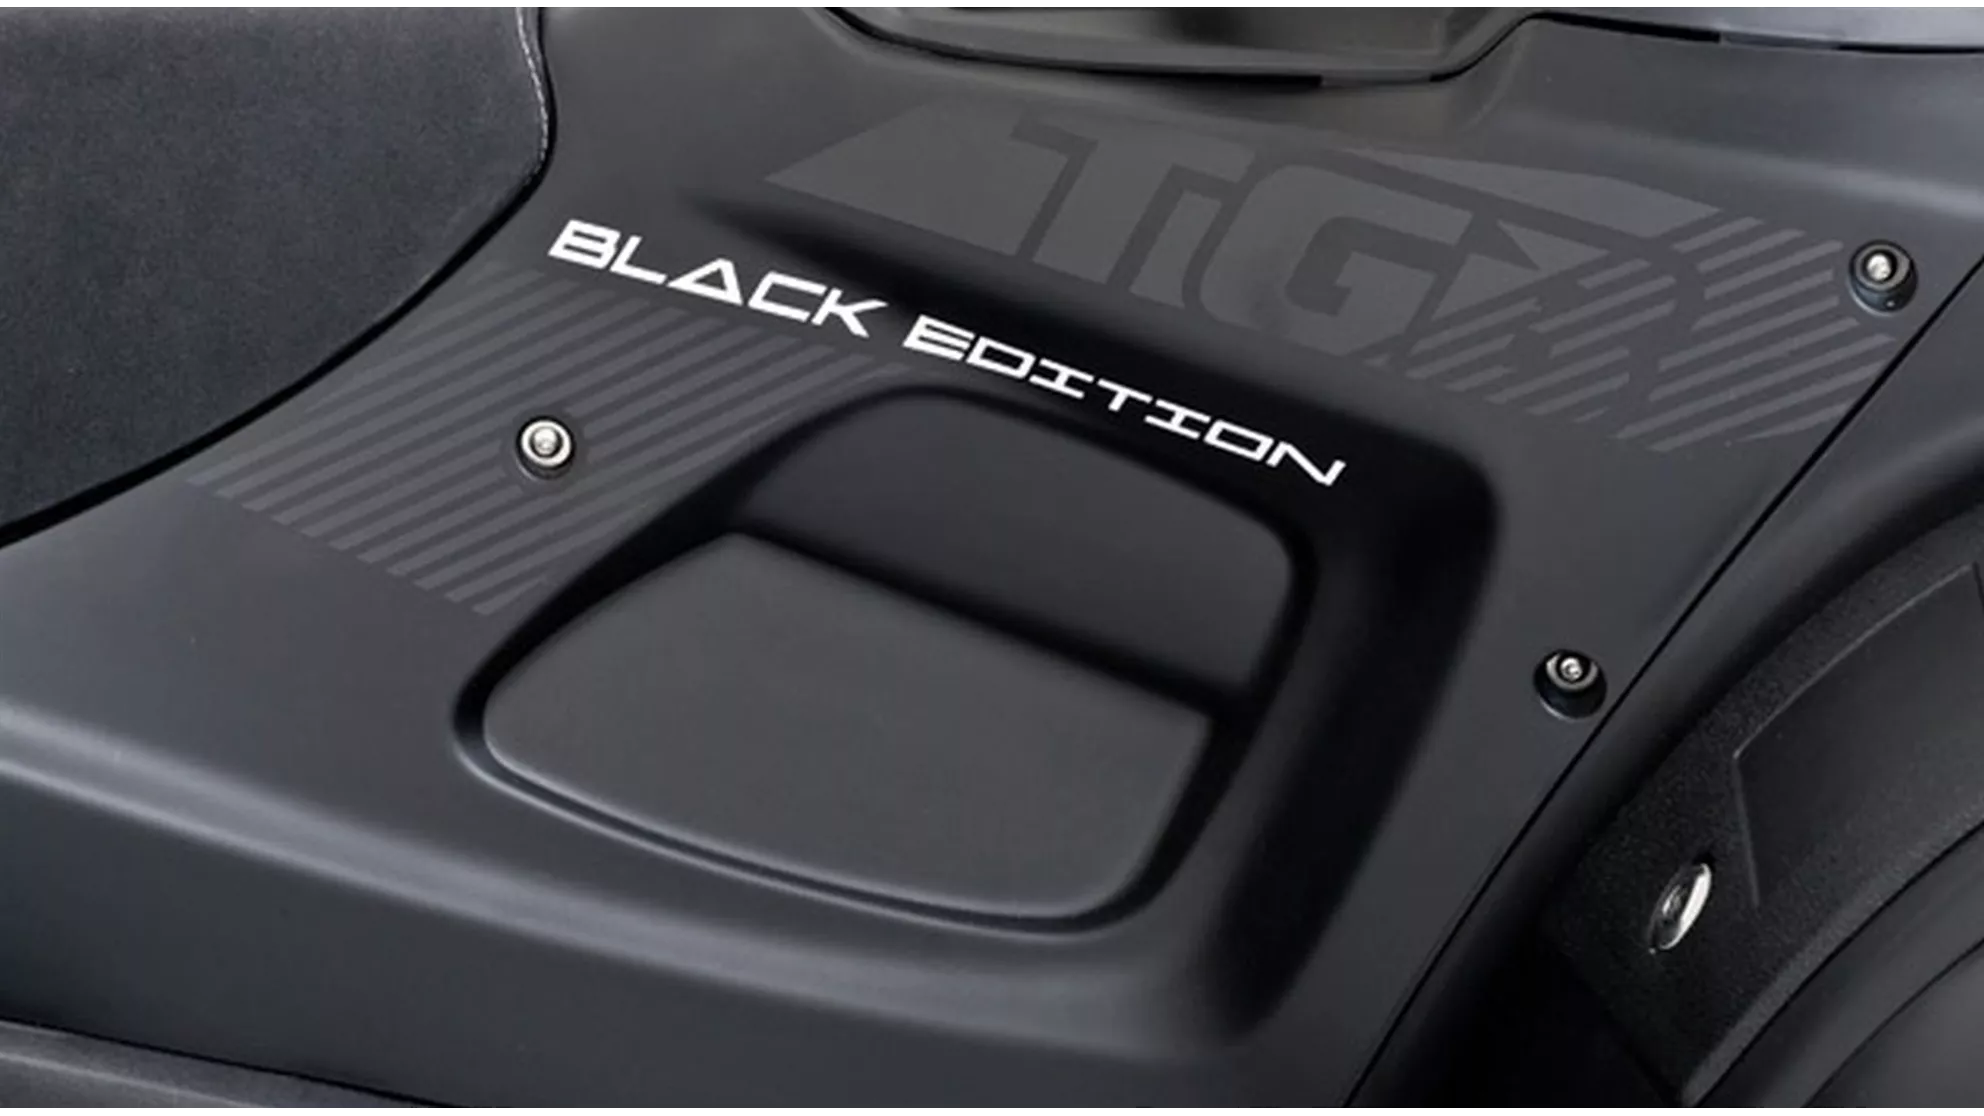 TGB Blade 550 EFI 4x4 IRS Black Edition - Resim 3